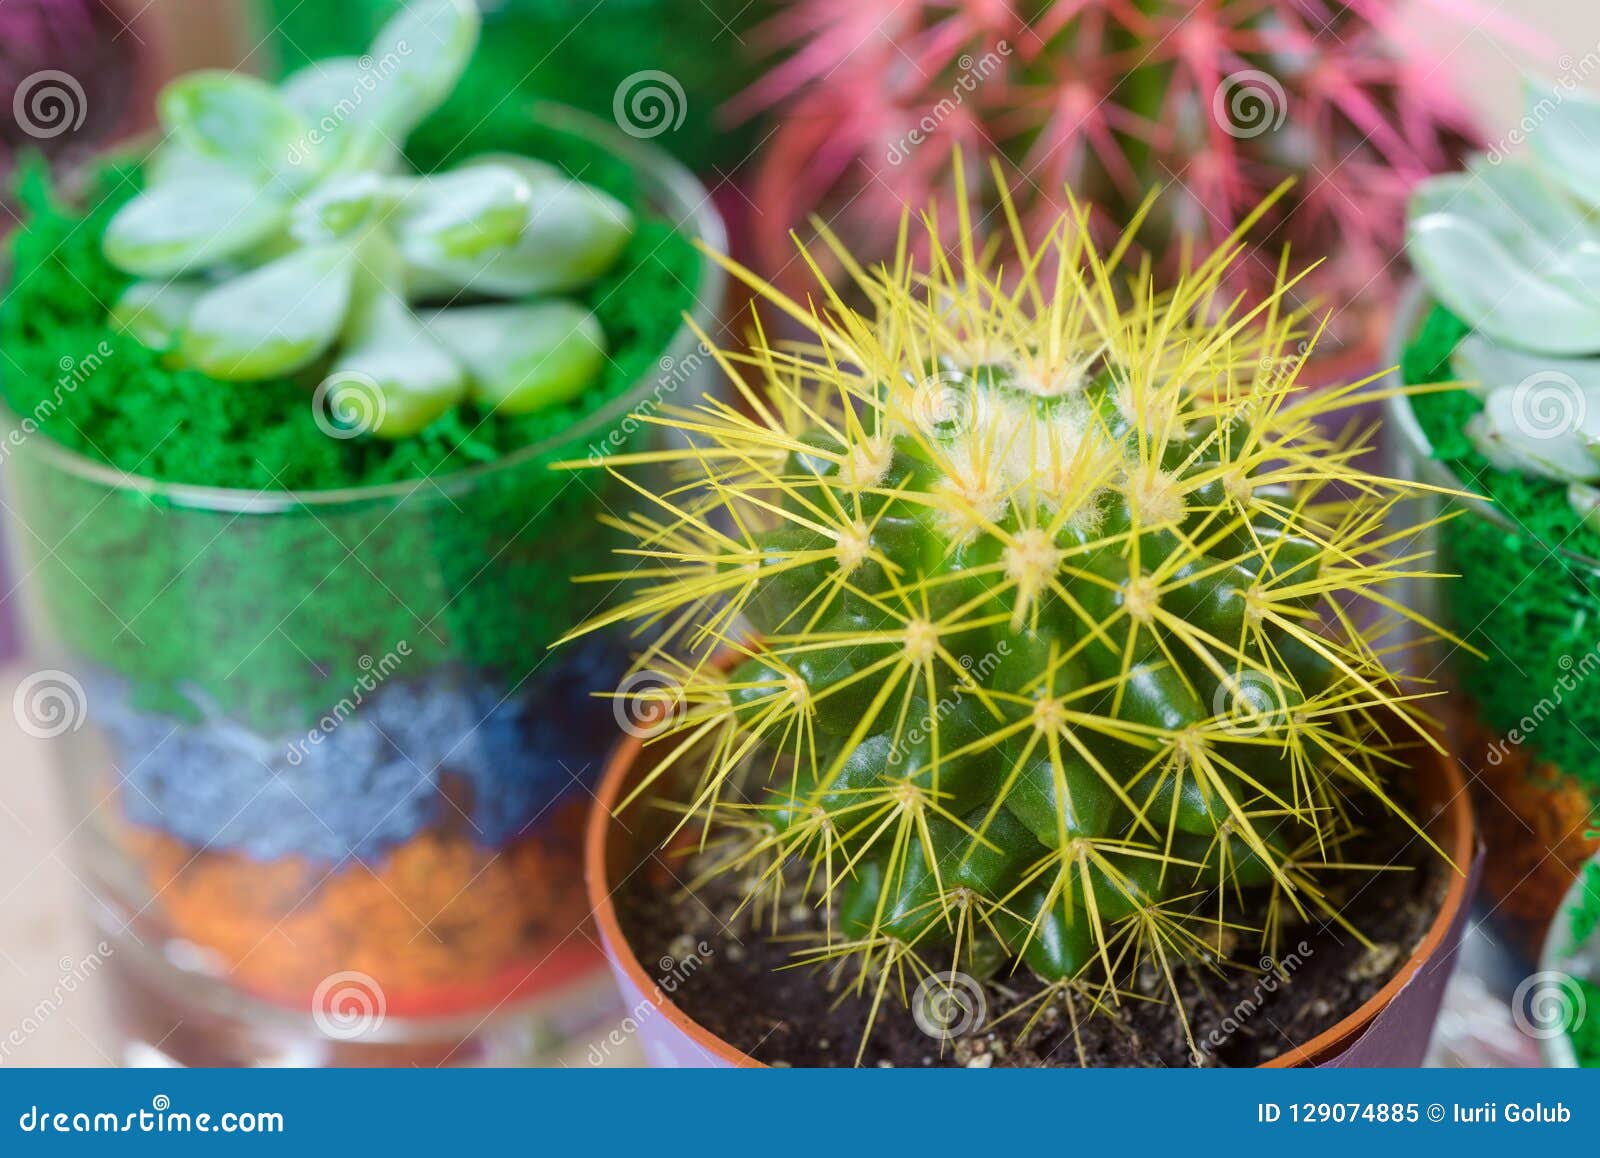 Mini Cactus With Yellow Needles Stock Image Image Of Business